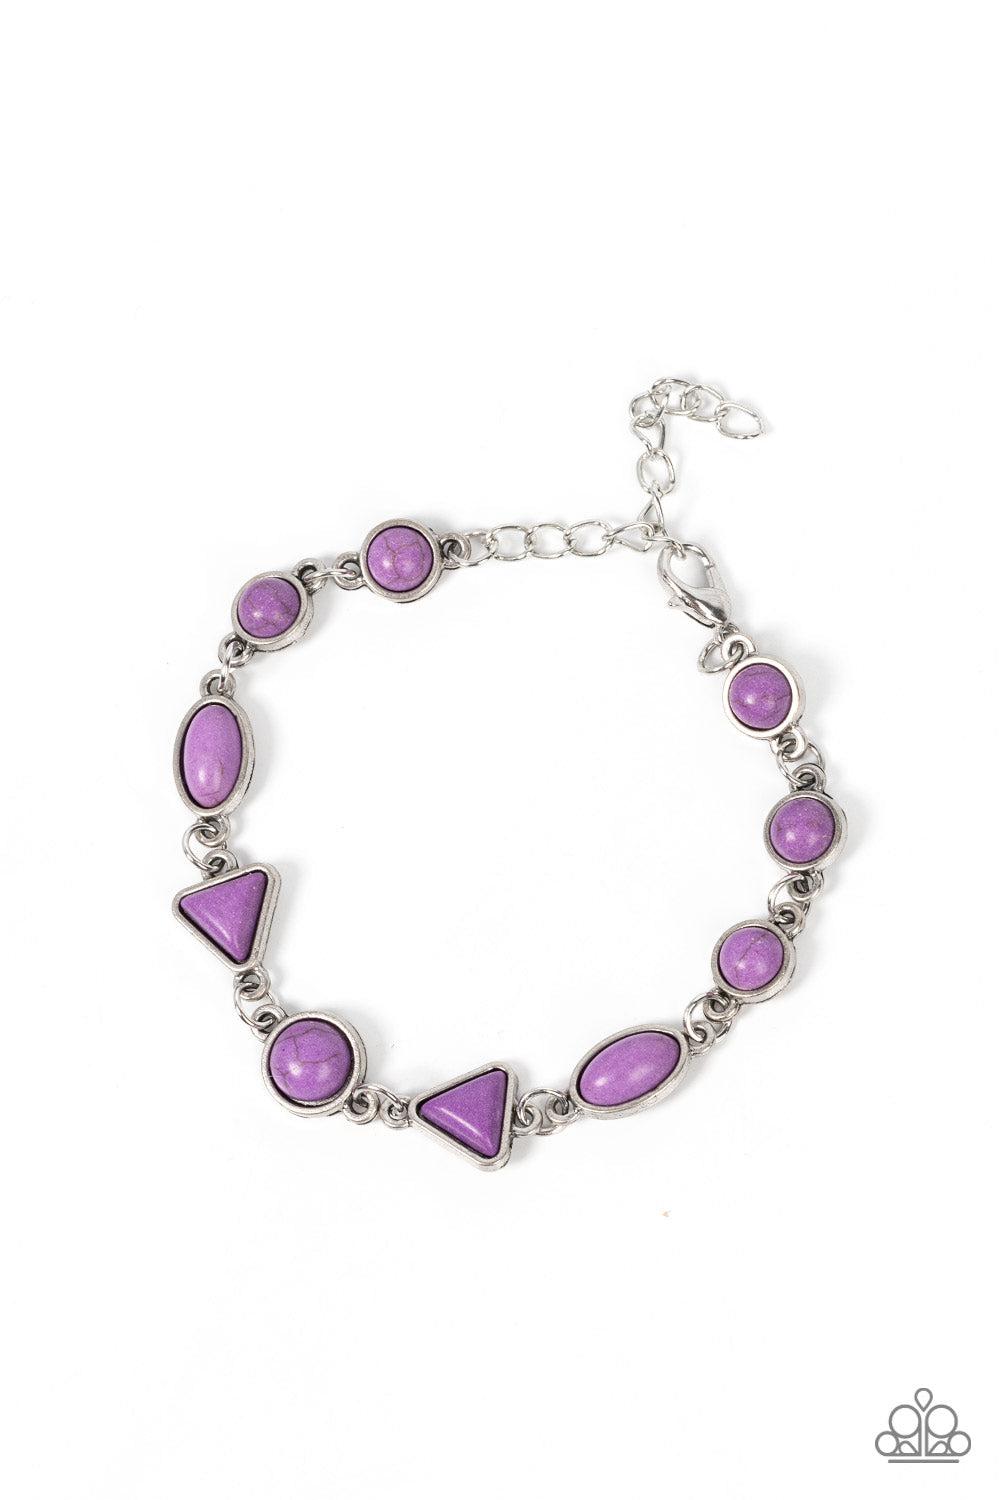 Quarry Quarrel Purple Stone Bracelet - Paparazzi Accessories- lightbox - CarasShop.com - $5 Jewelry by Cara Jewels